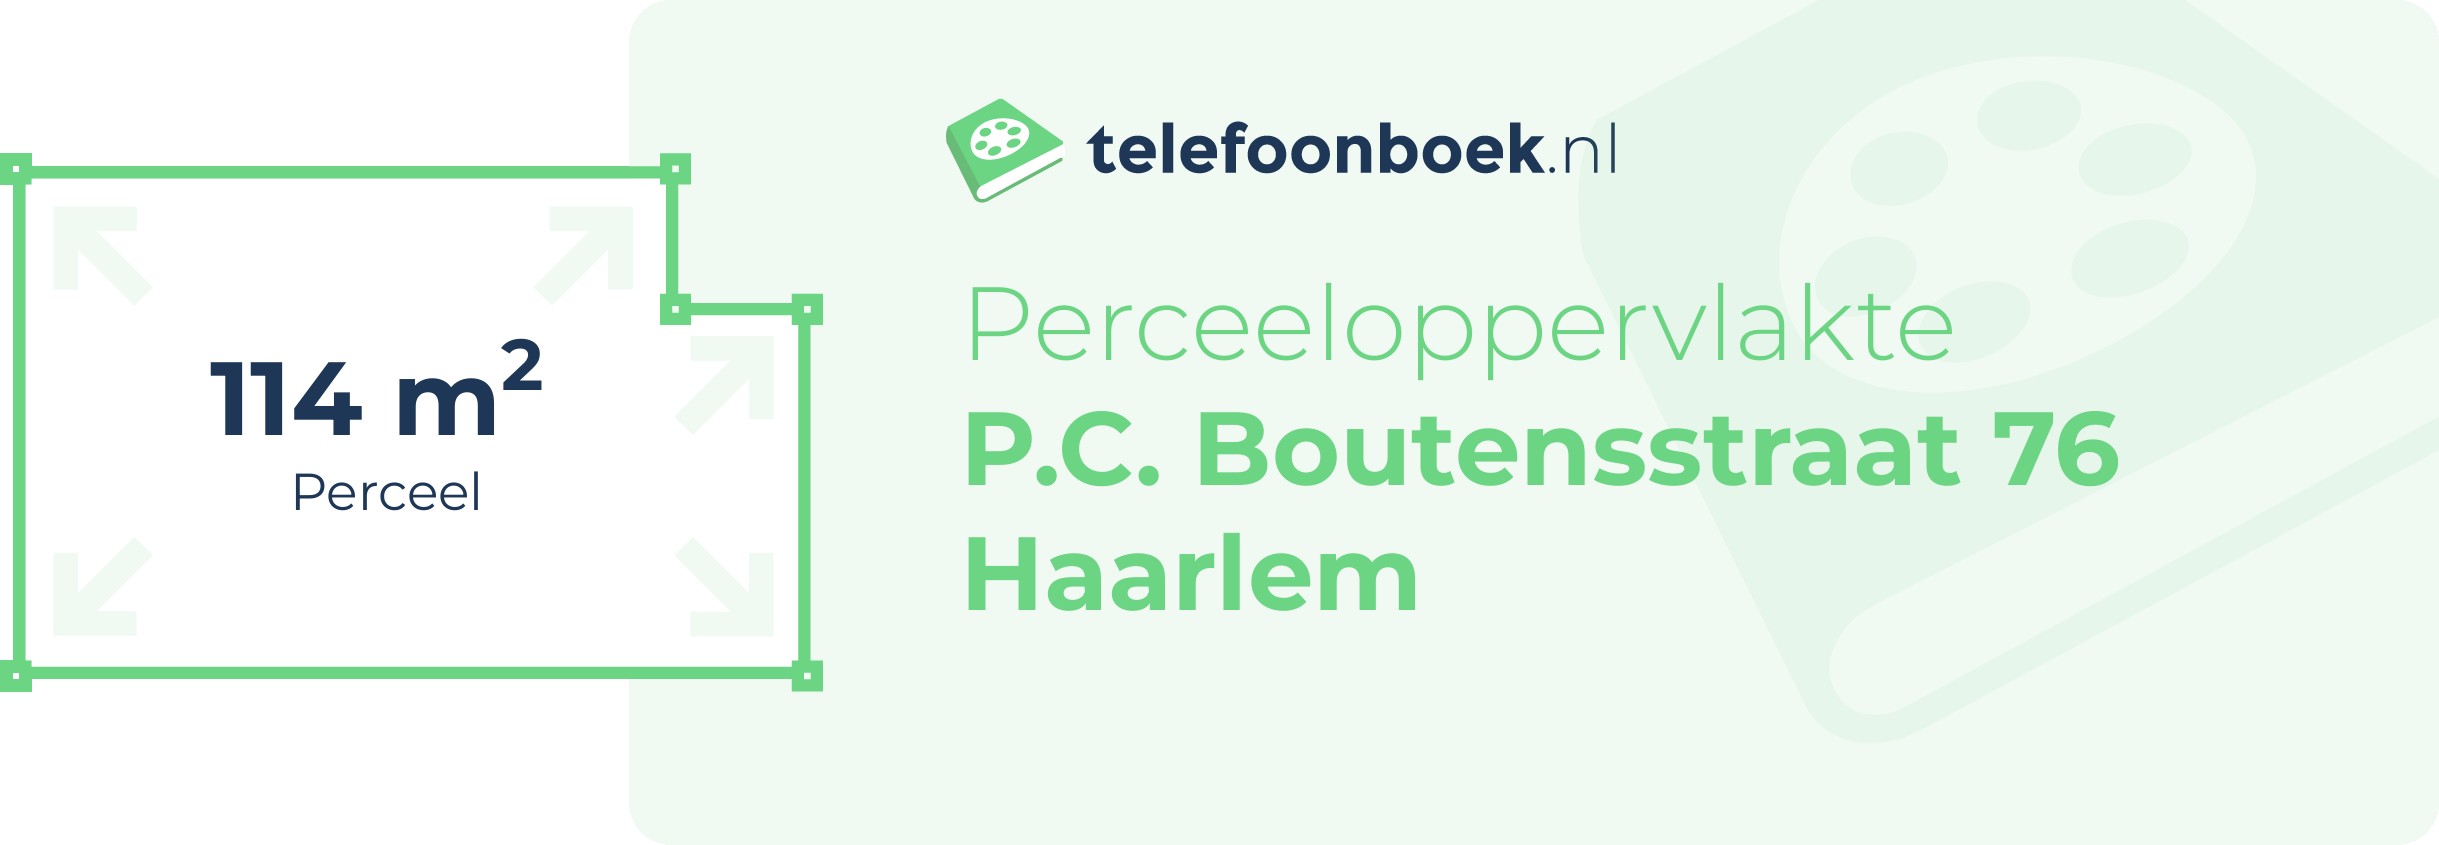 Perceeloppervlakte P.C. Boutensstraat 76 Haarlem